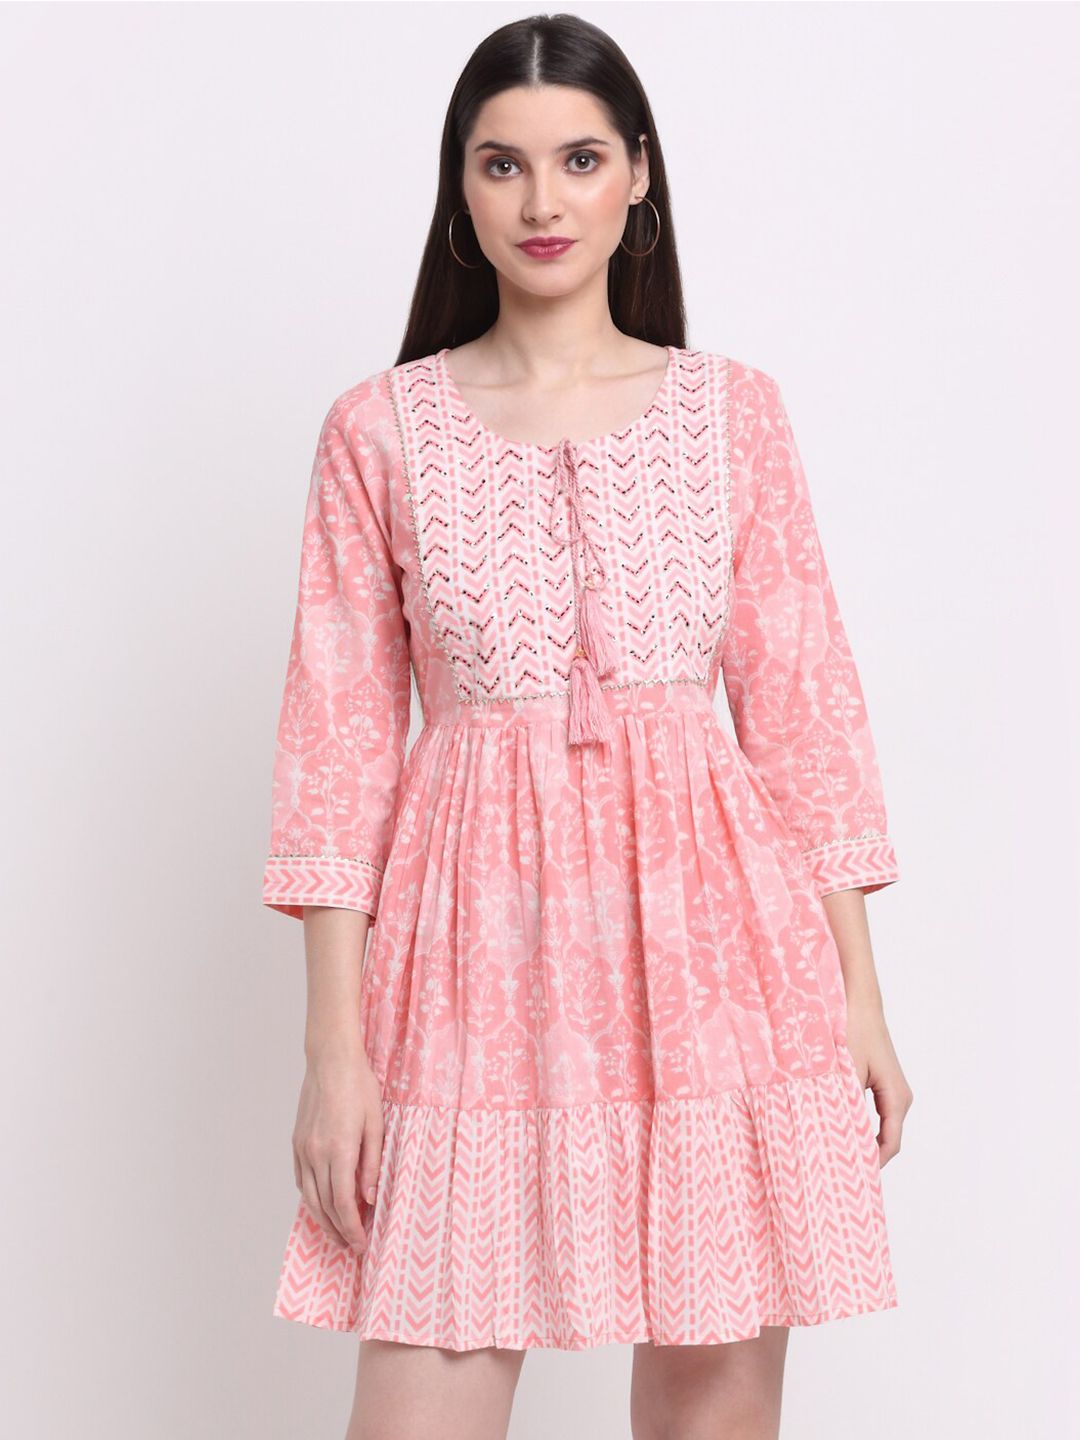 KALINI Peach-Coloured & White Ethnic Motifs Ethnic Dress Price in India